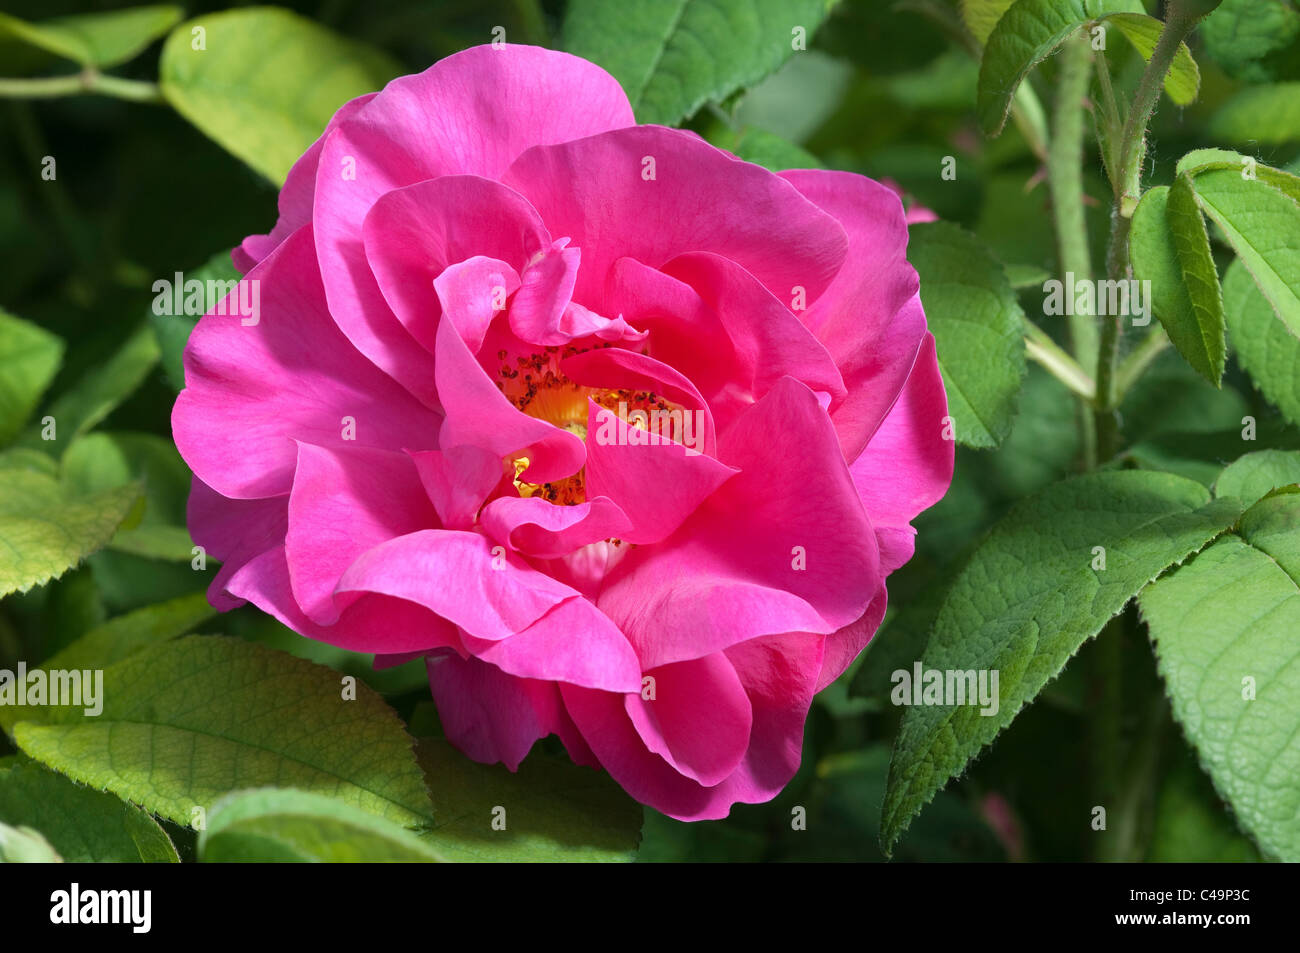 Apothecarys Rose (Rosa gallica officinalis), flor. Foto de stock